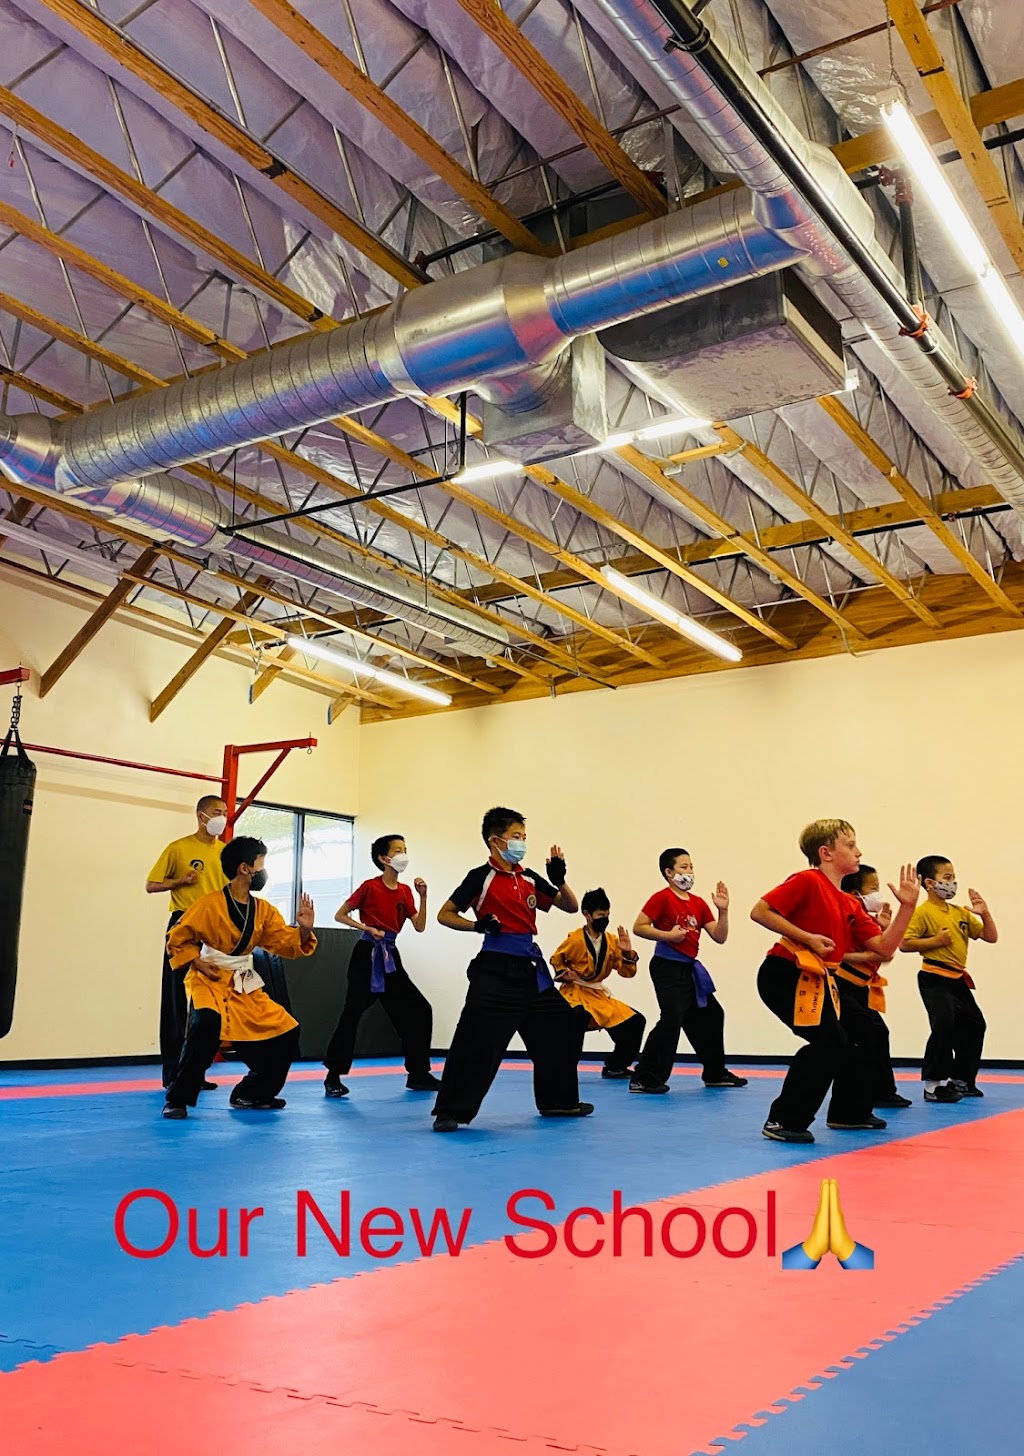 Shaolin Kung Fu & Tai Chi Training | 700 E Silverado Ranch Blvd #120, Las Vegas, NV 89183, USA | Phone: (702) 570-5120